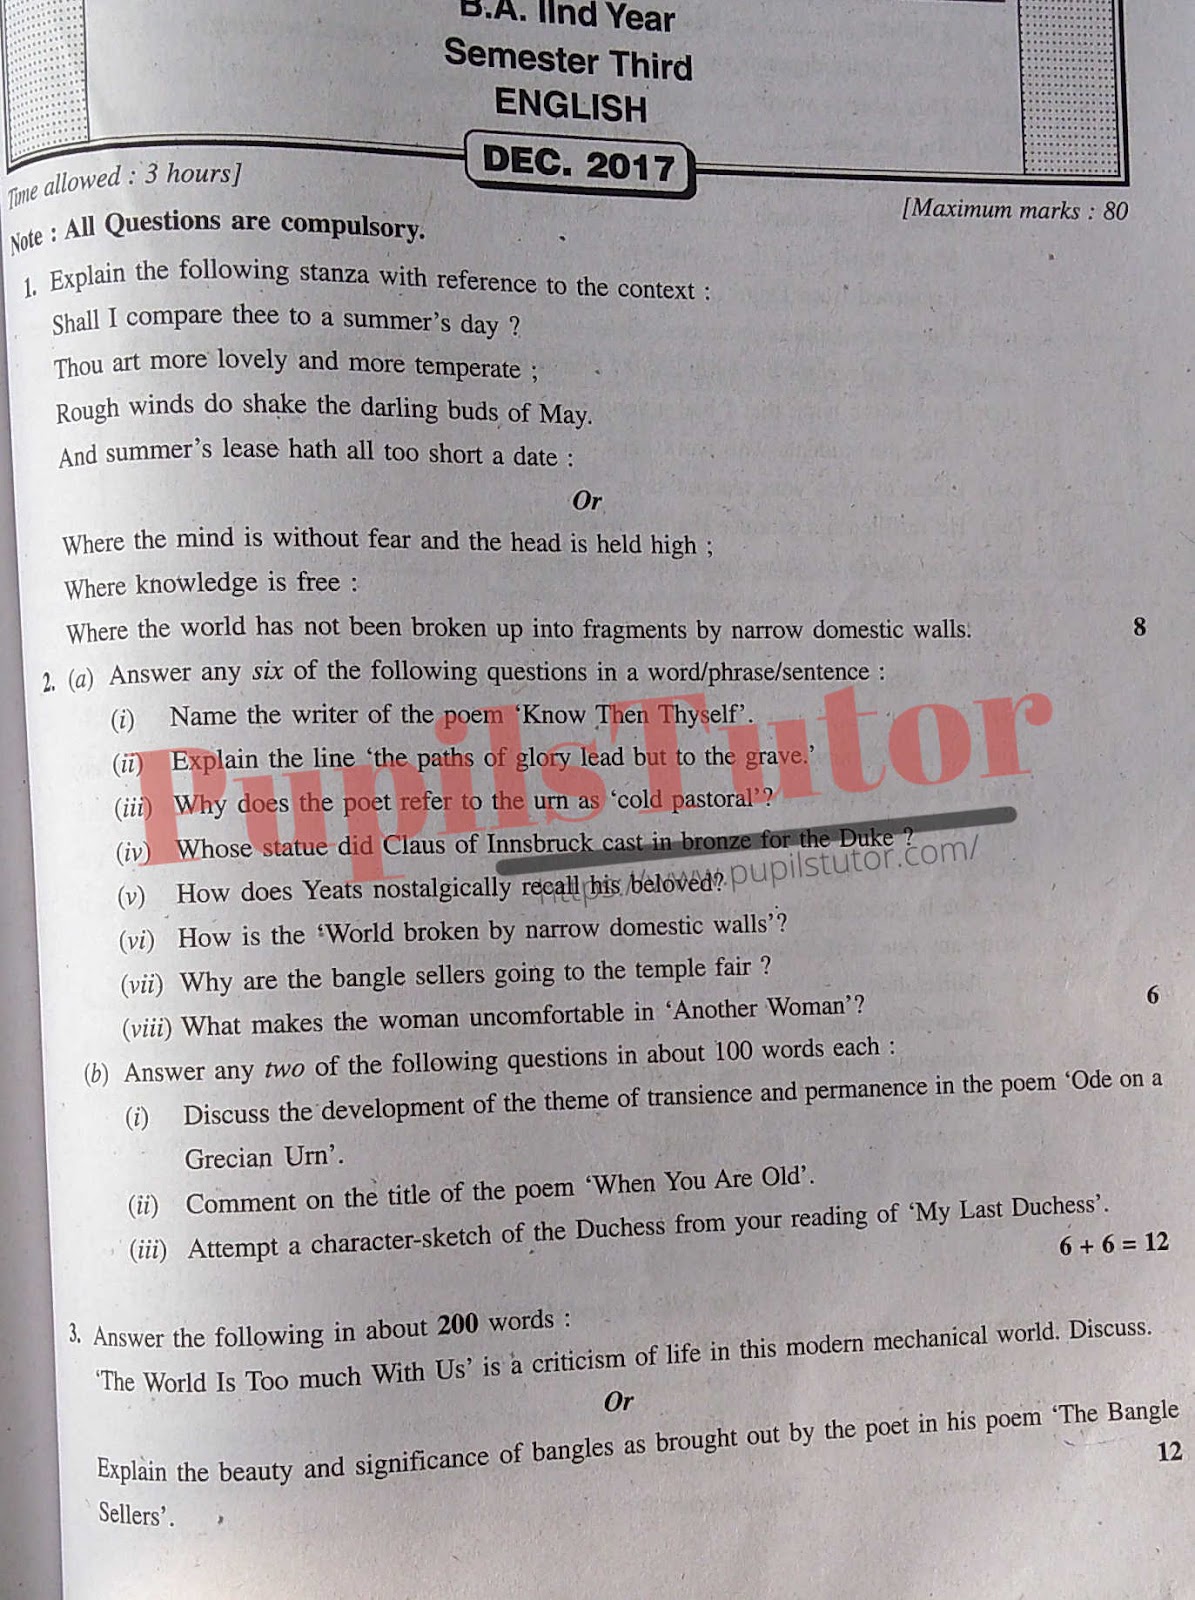 KUK (Kurukshetra University, Kurukshetra Haryana) BA Semester Exam Third Semester Previous Year English Question Paper For December, 2017 Exam (Question Paper Page 1) - pupilstutor.com